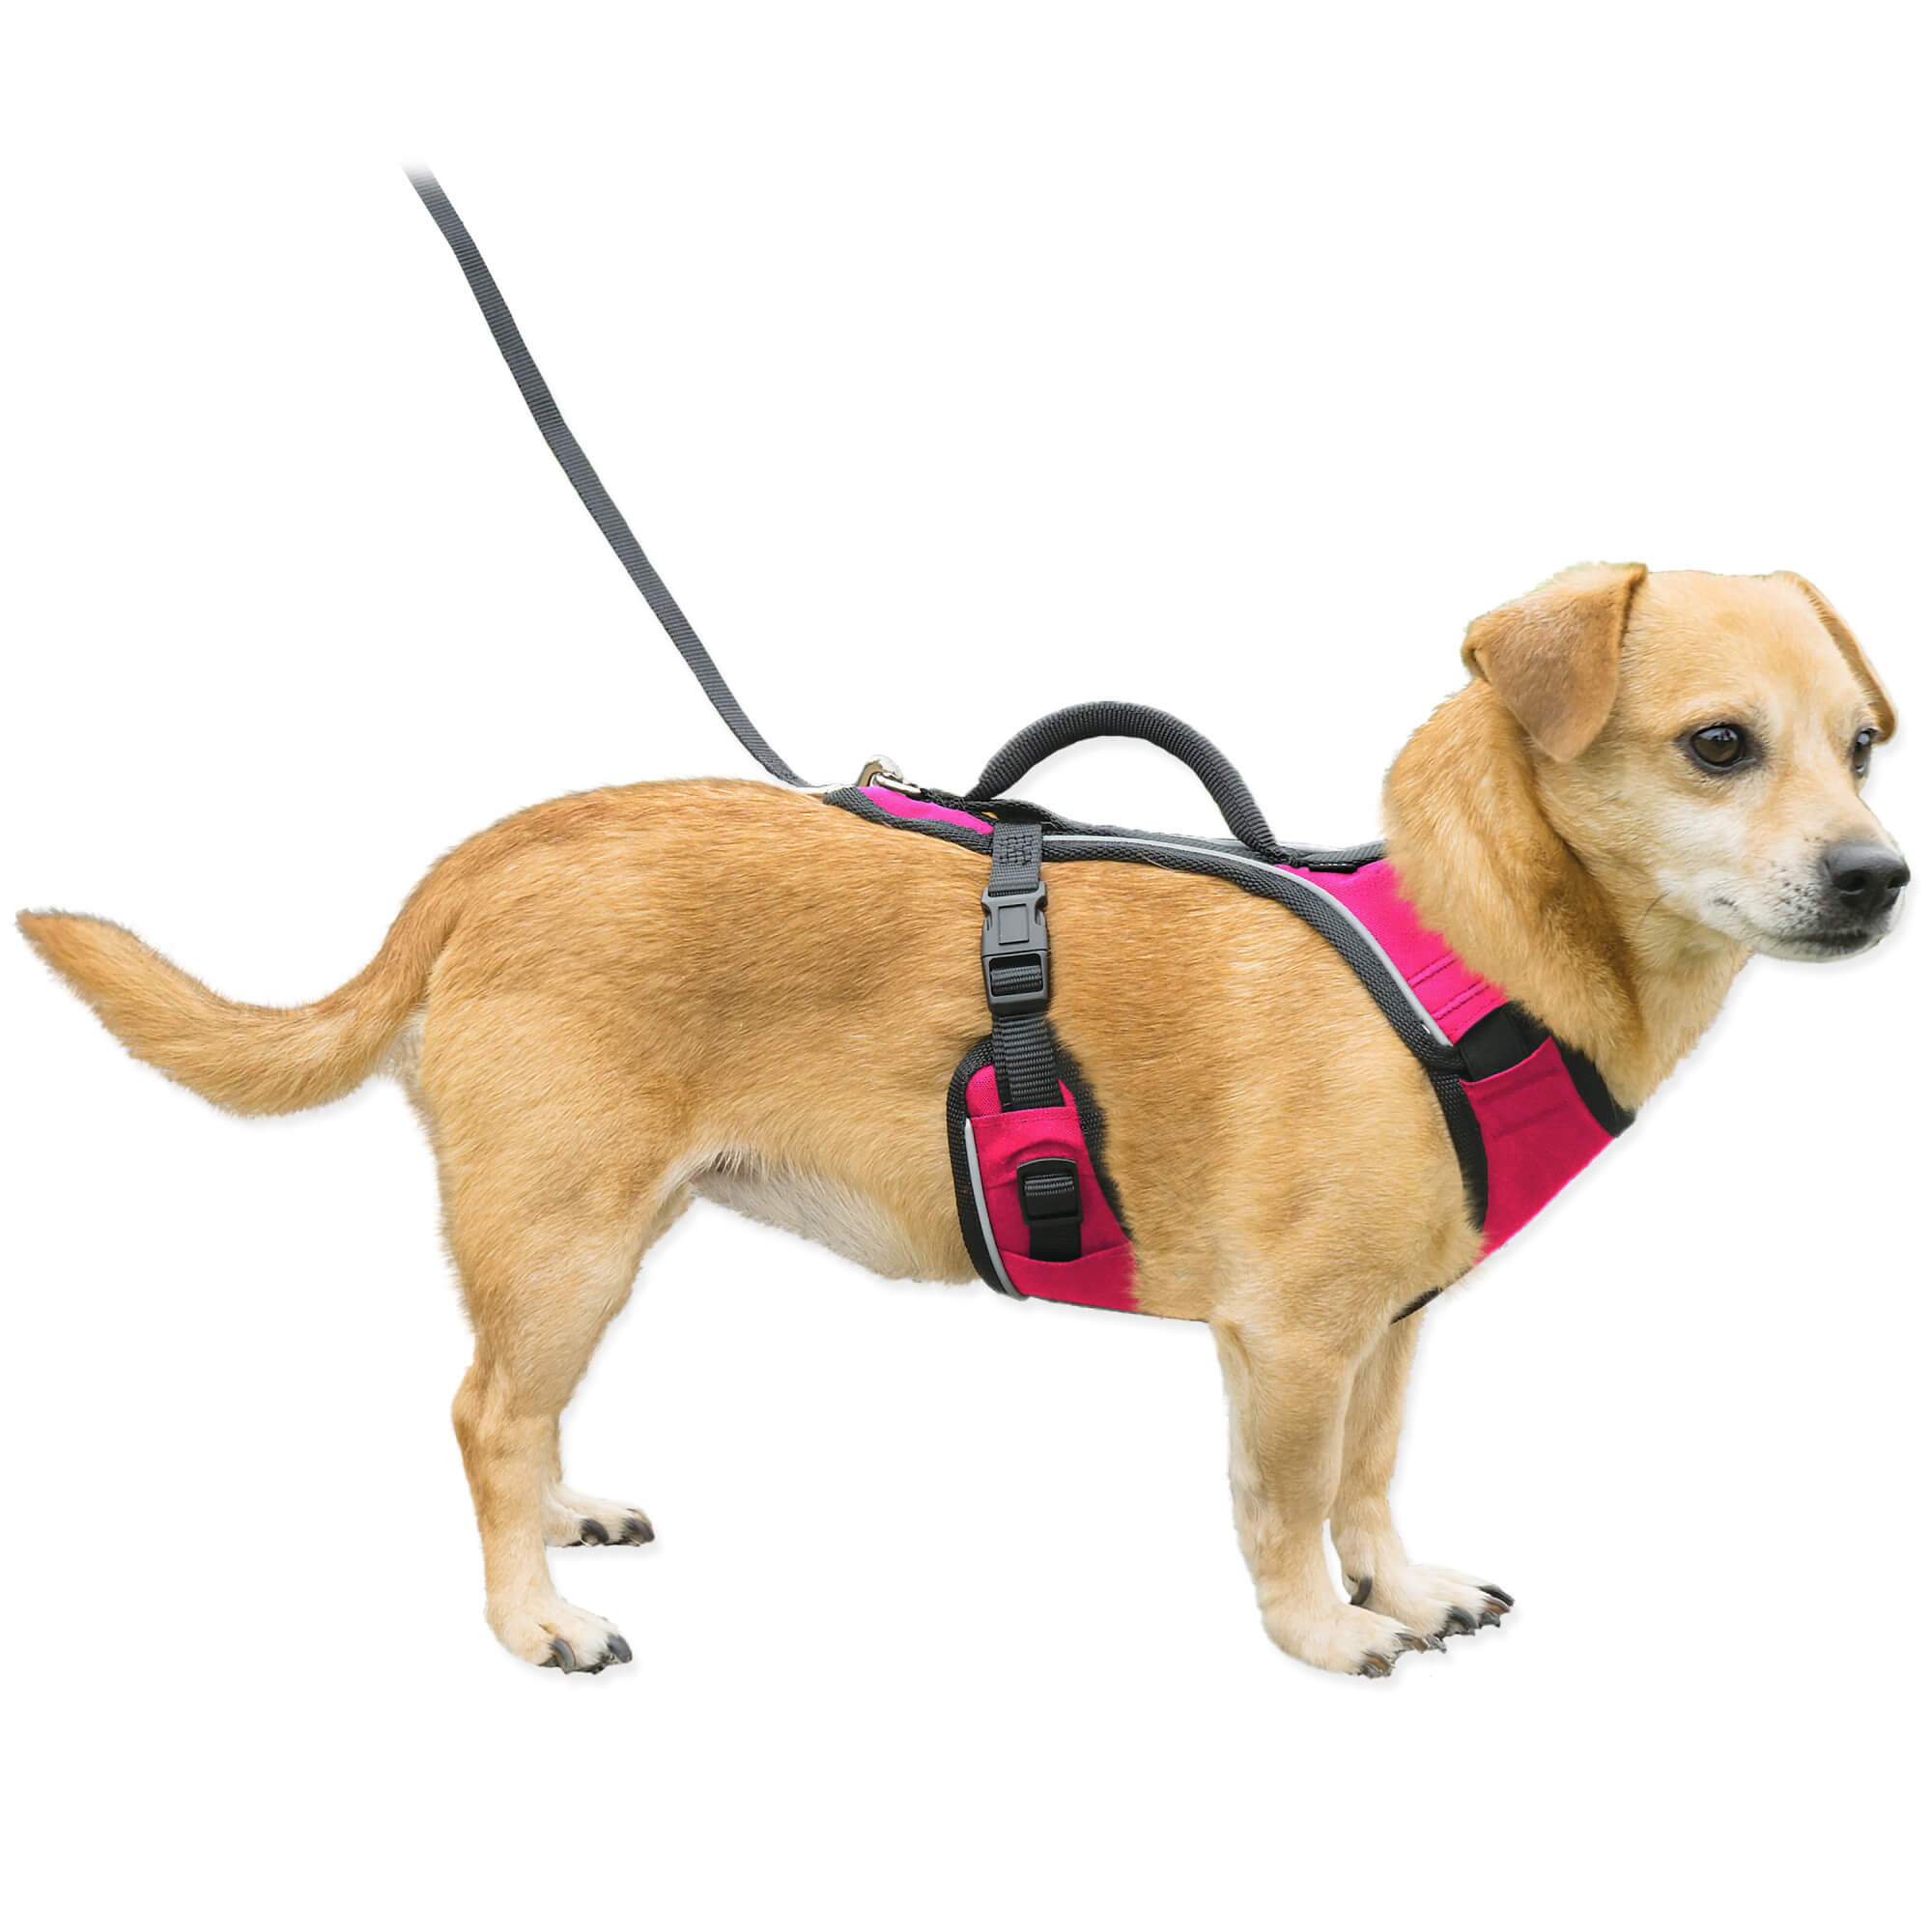 Dog wearing pink petsafe easysport harness in xsmall